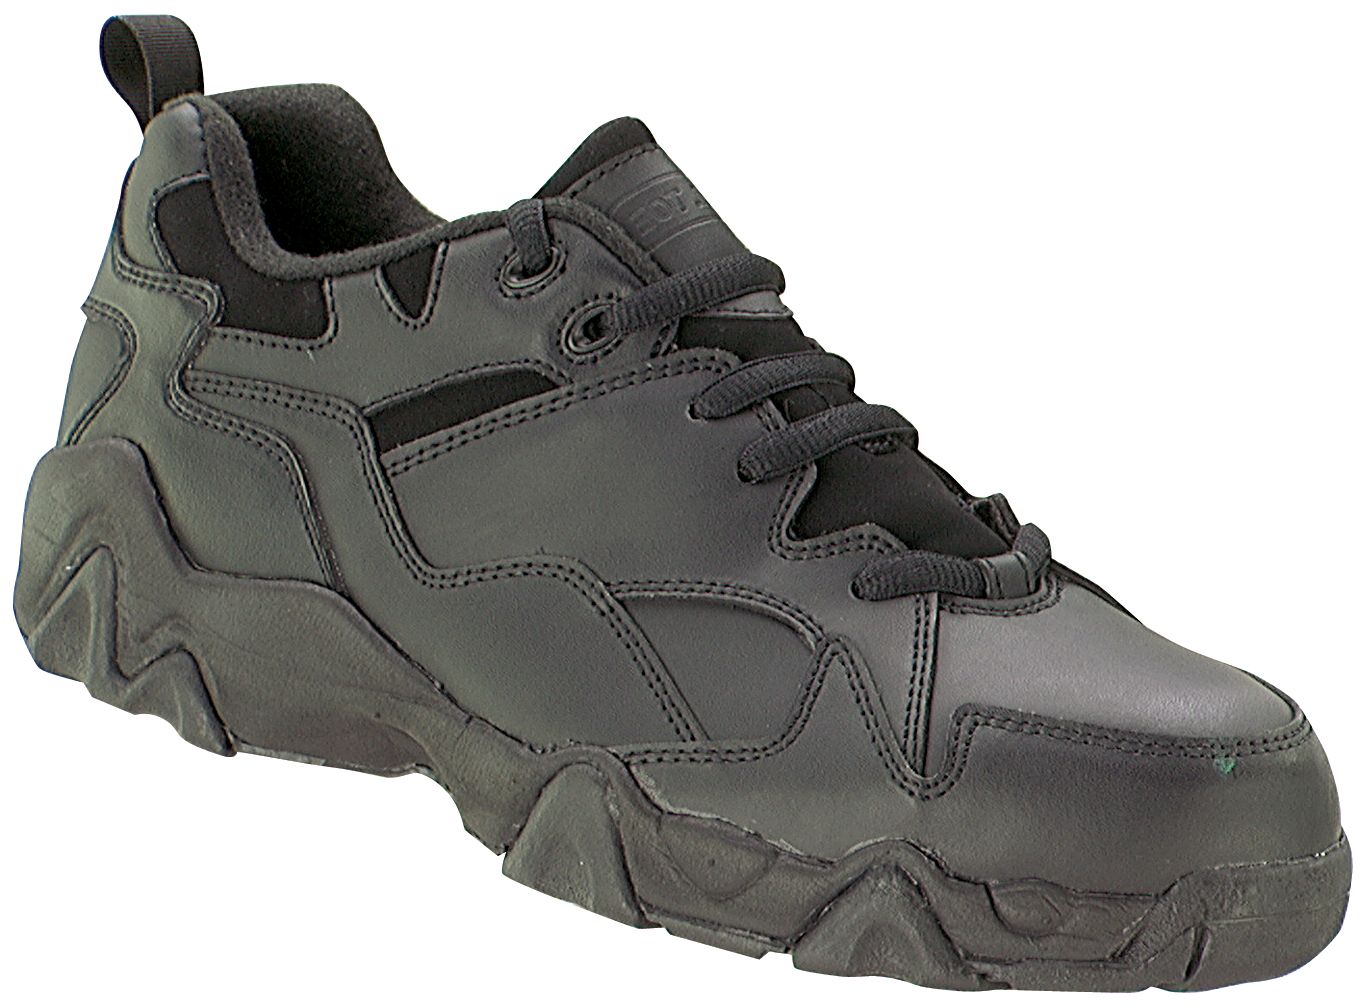 Roebucks Great Price Men's Steel Toe Shoe - Black